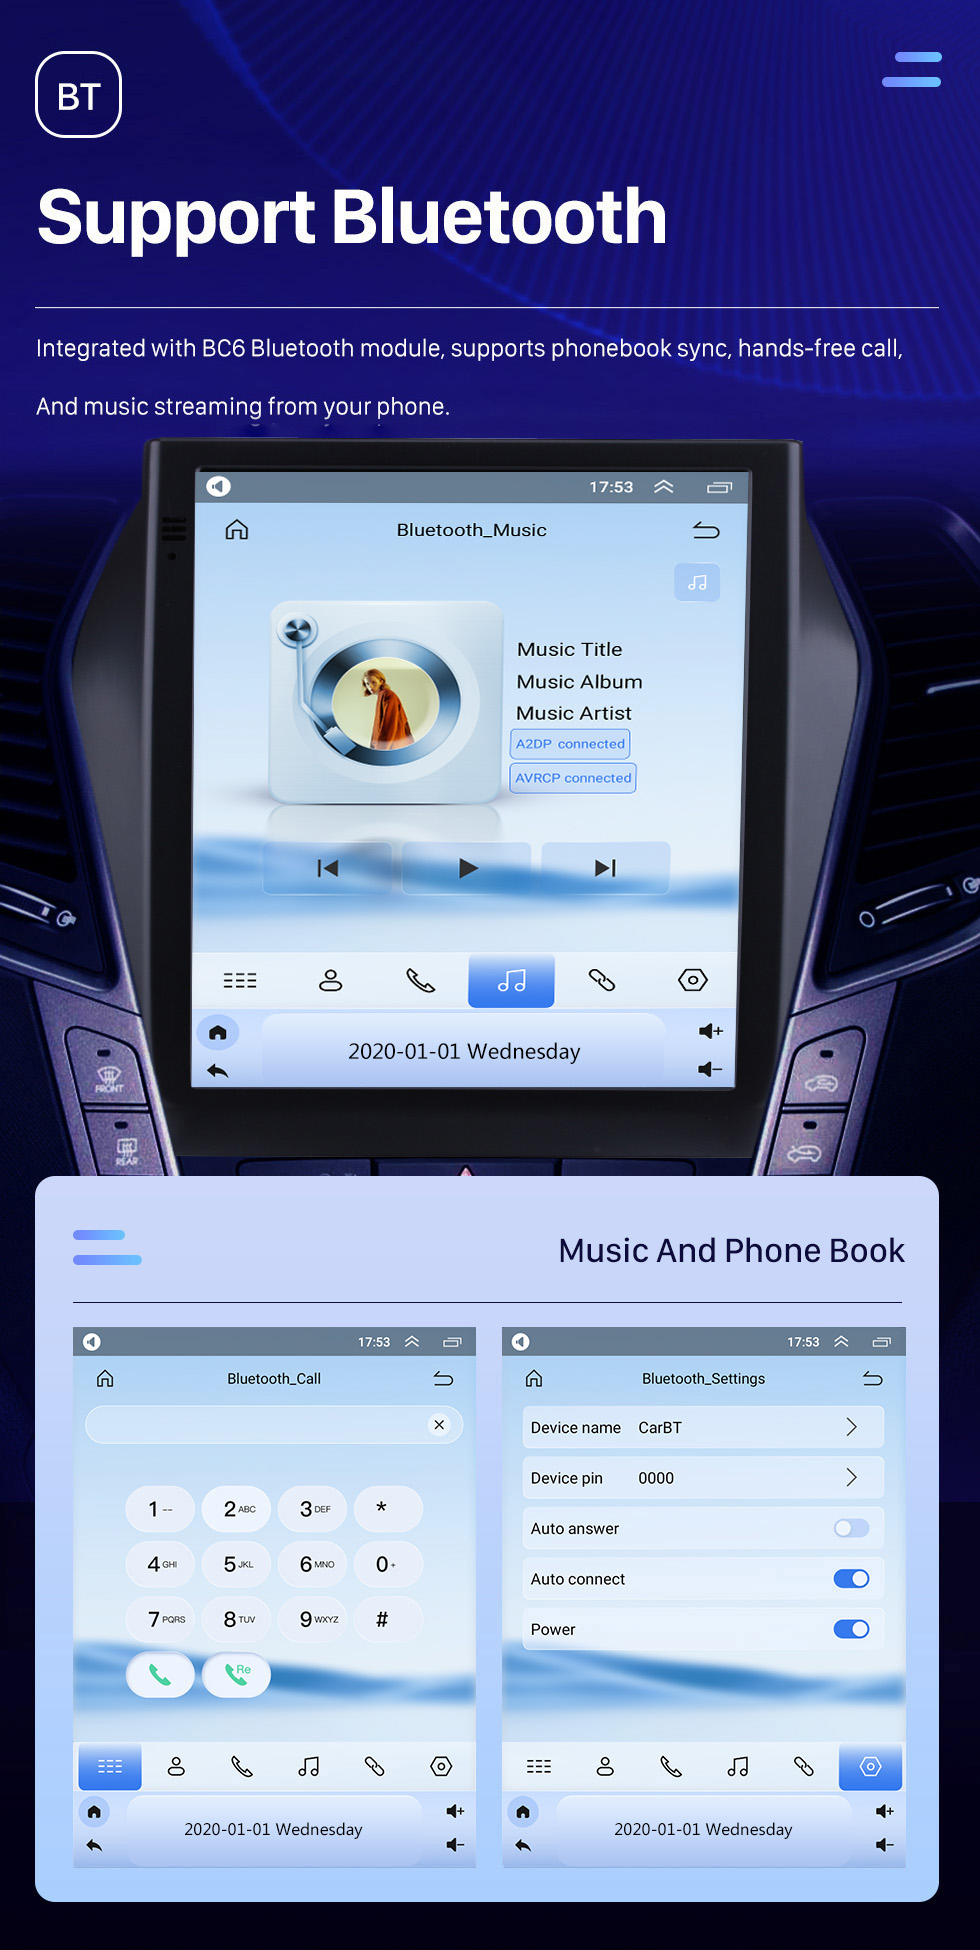 Seicane 2013 2014-2017 Hyundai Santa Fe IX45 Sonata 9,7 Zoll HD Touchscreen Android 10.0 GPS Auto Stereo Audio mit Bluetooth Carplay FM AUX WIFI Unterstützung Rückfahrkamera Digital TV OBD2 DVD TPMS